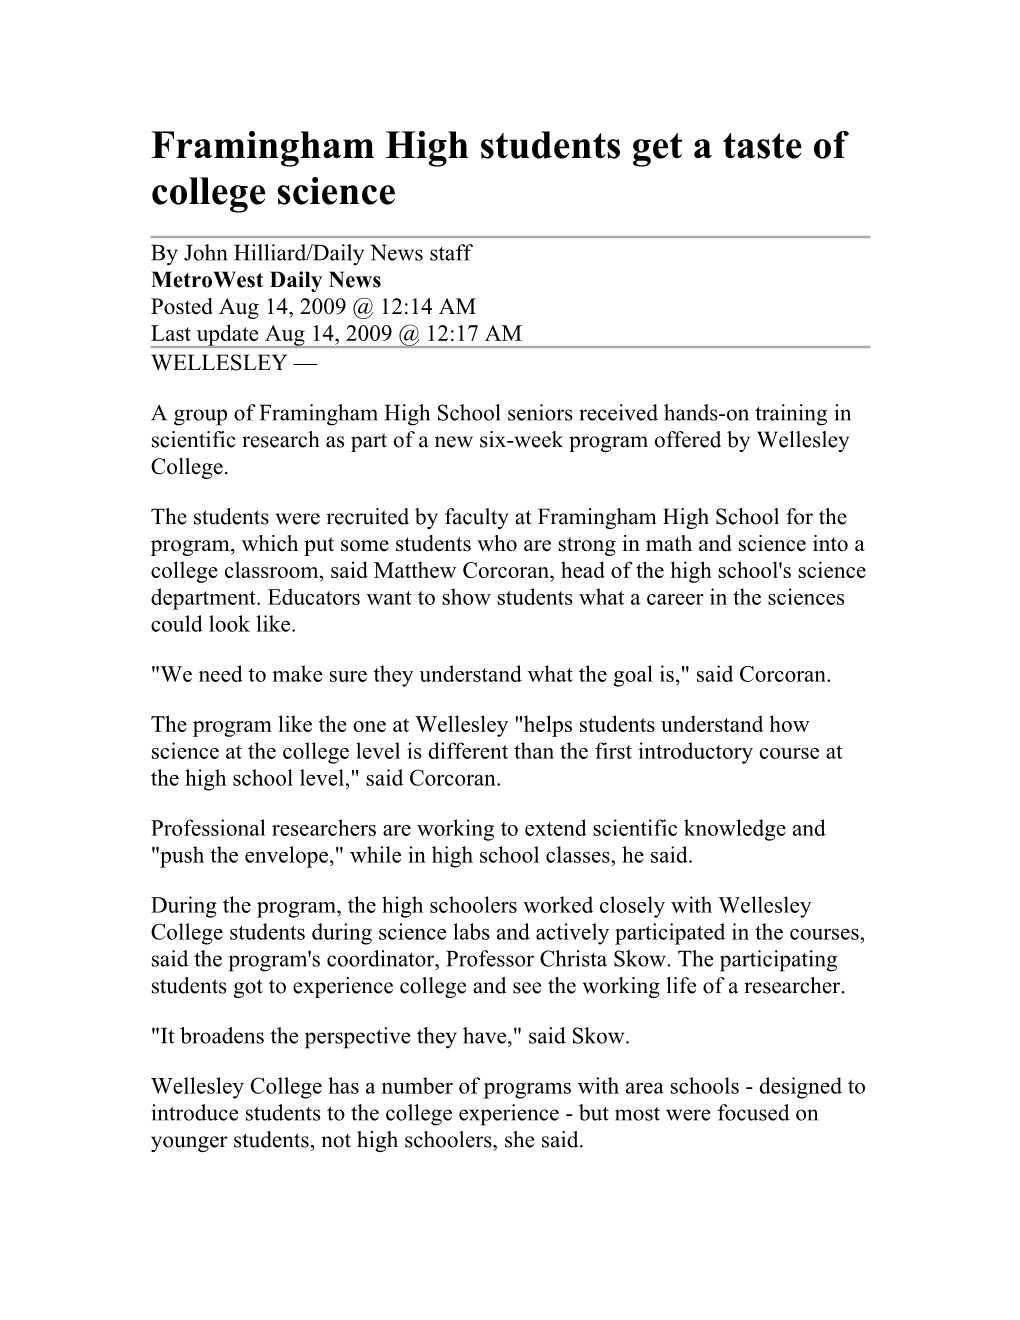 Framingham High Students Get a Taste of College Science